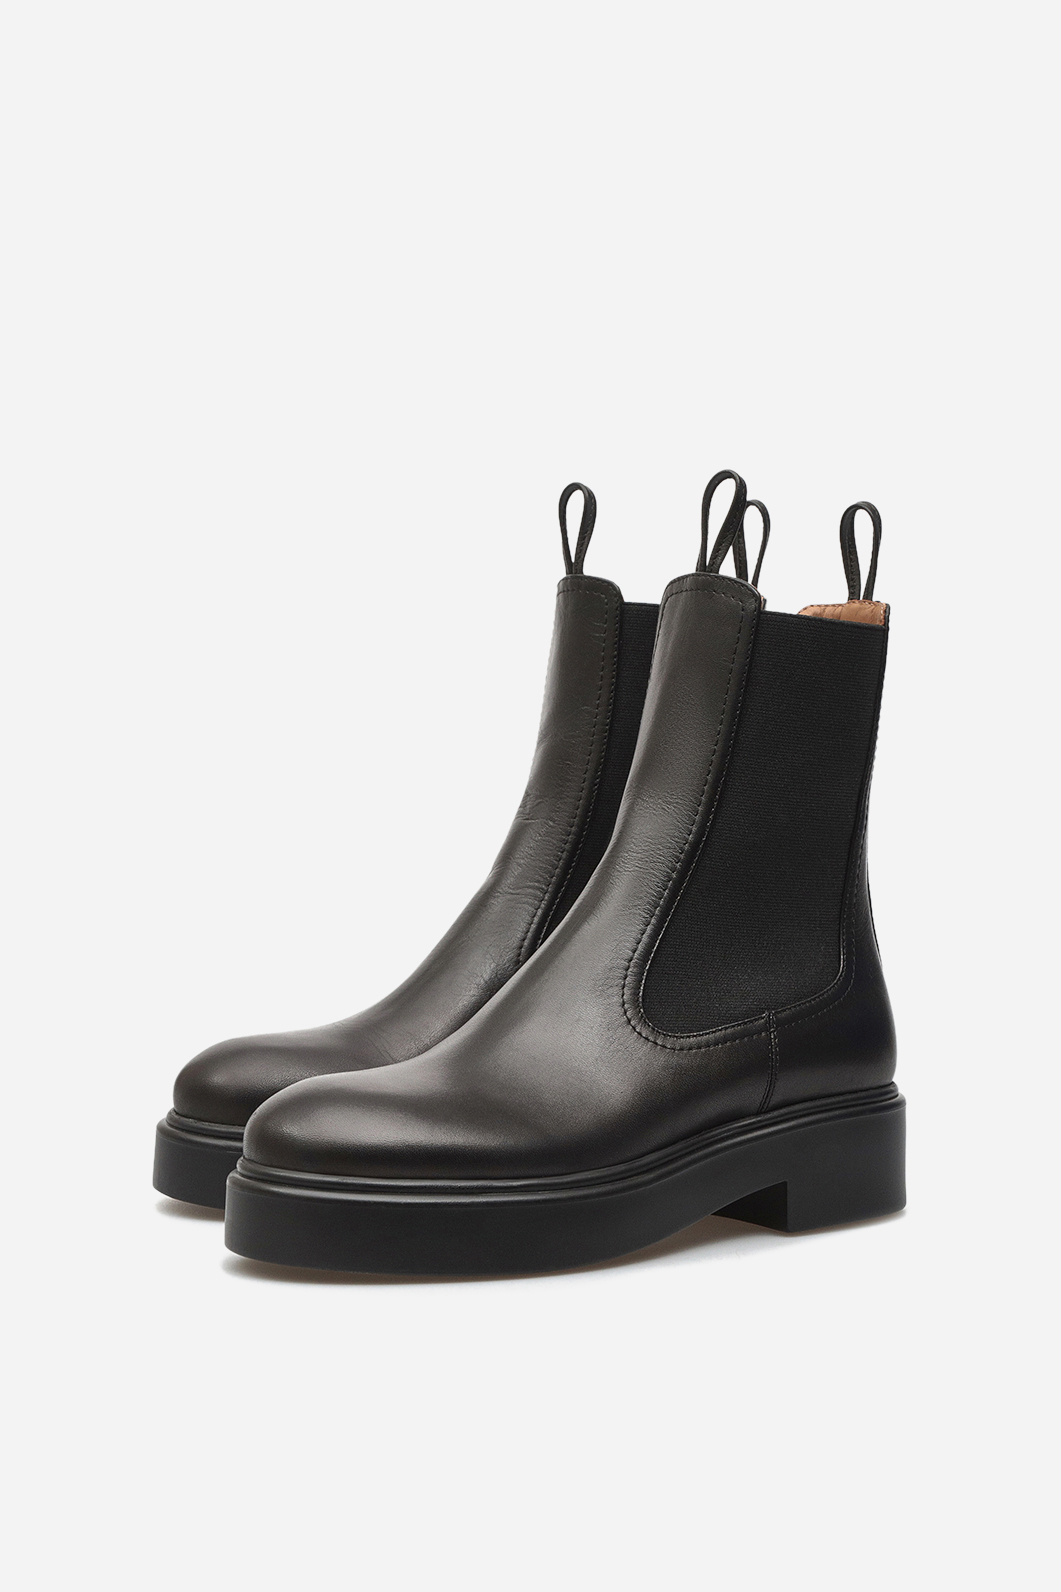 Taya black leather
chelsea boots